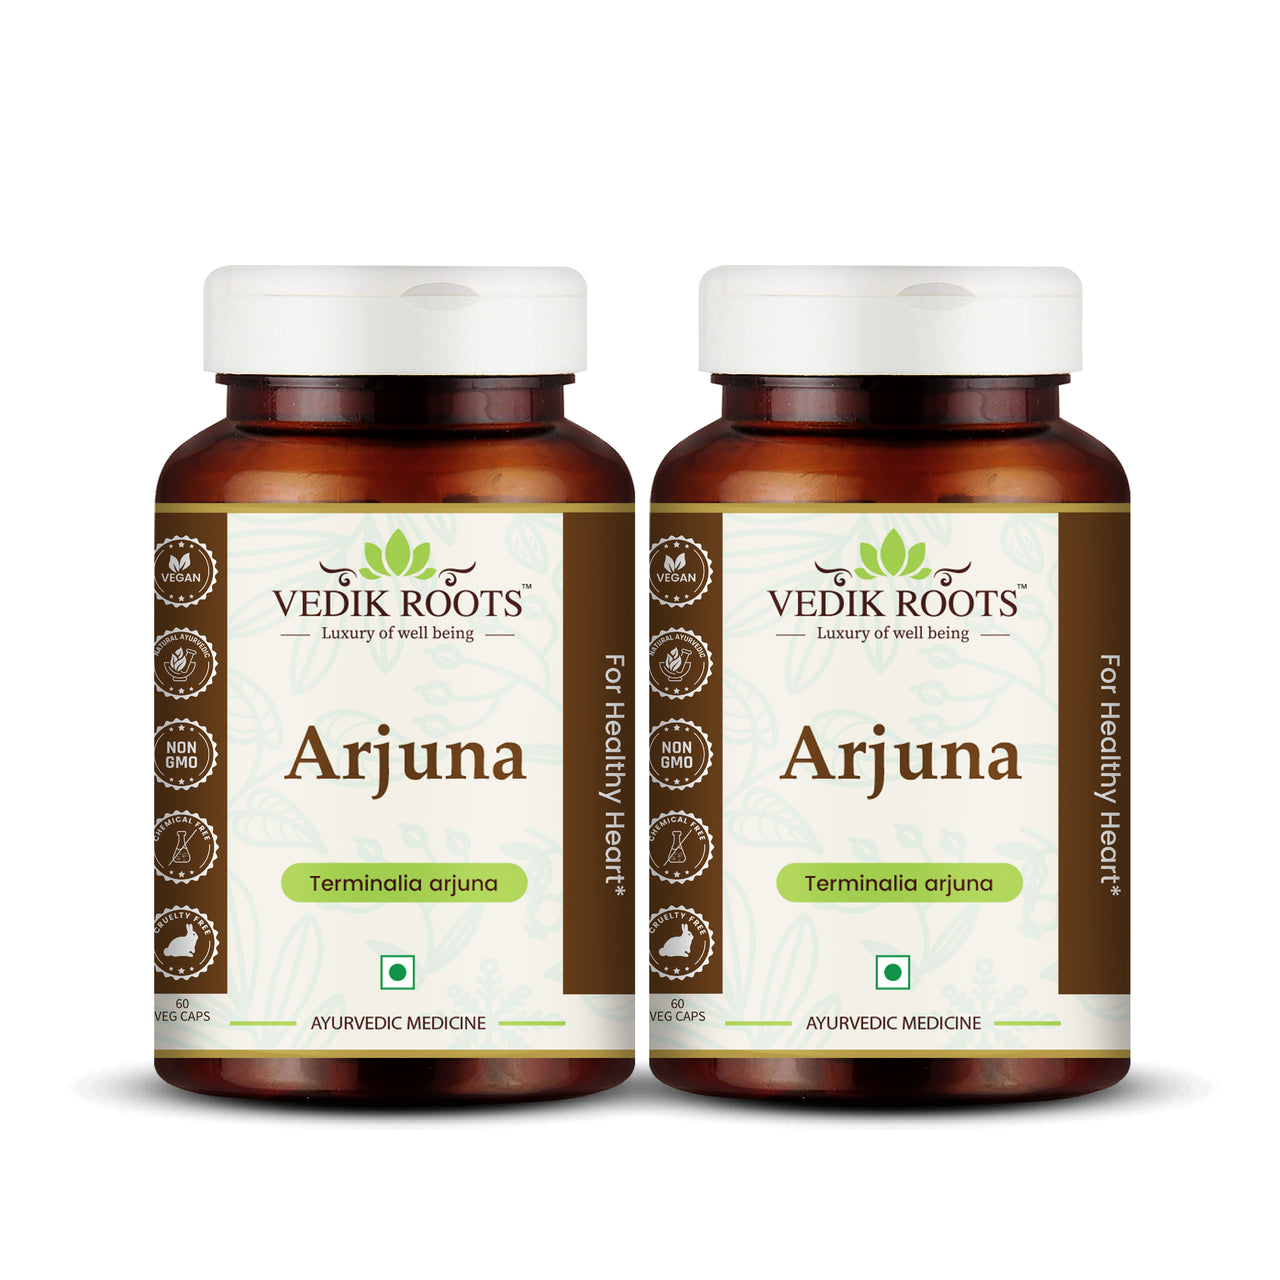 arjuna capsules pack of two